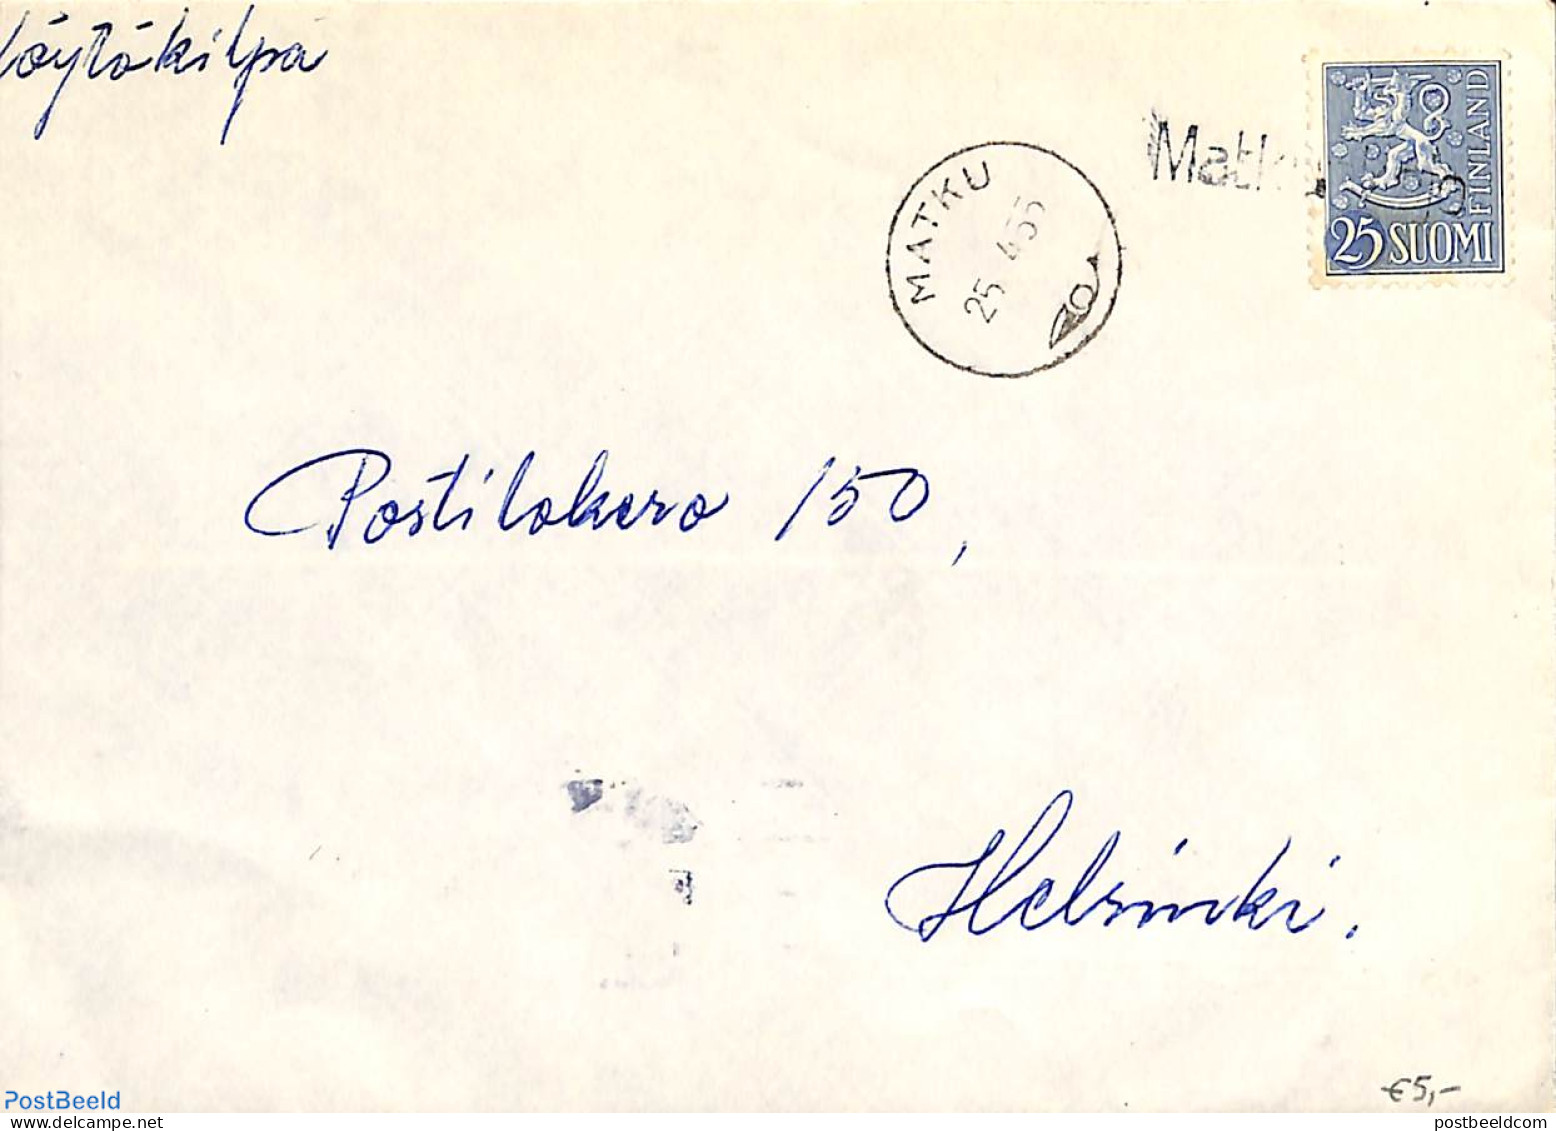 Finland 1955 Letter From MATKU To Helsinki, Postal History - Briefe U. Dokumente